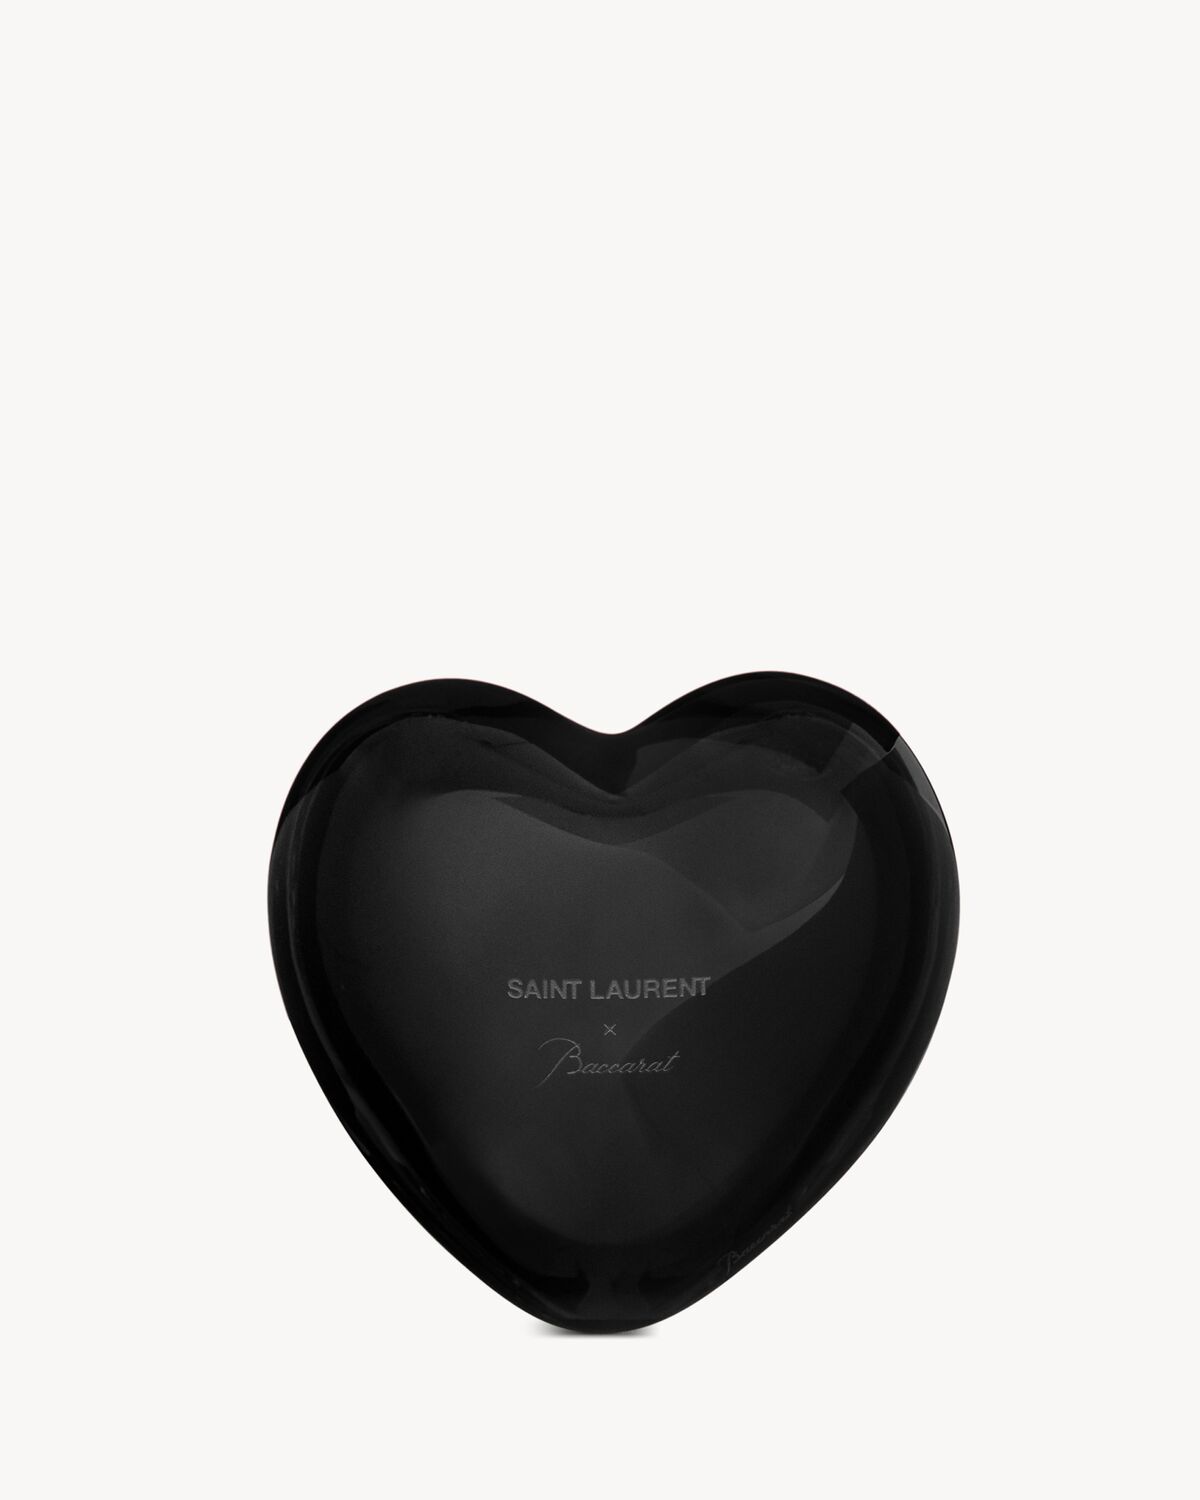 Baccarat heart in black crystal